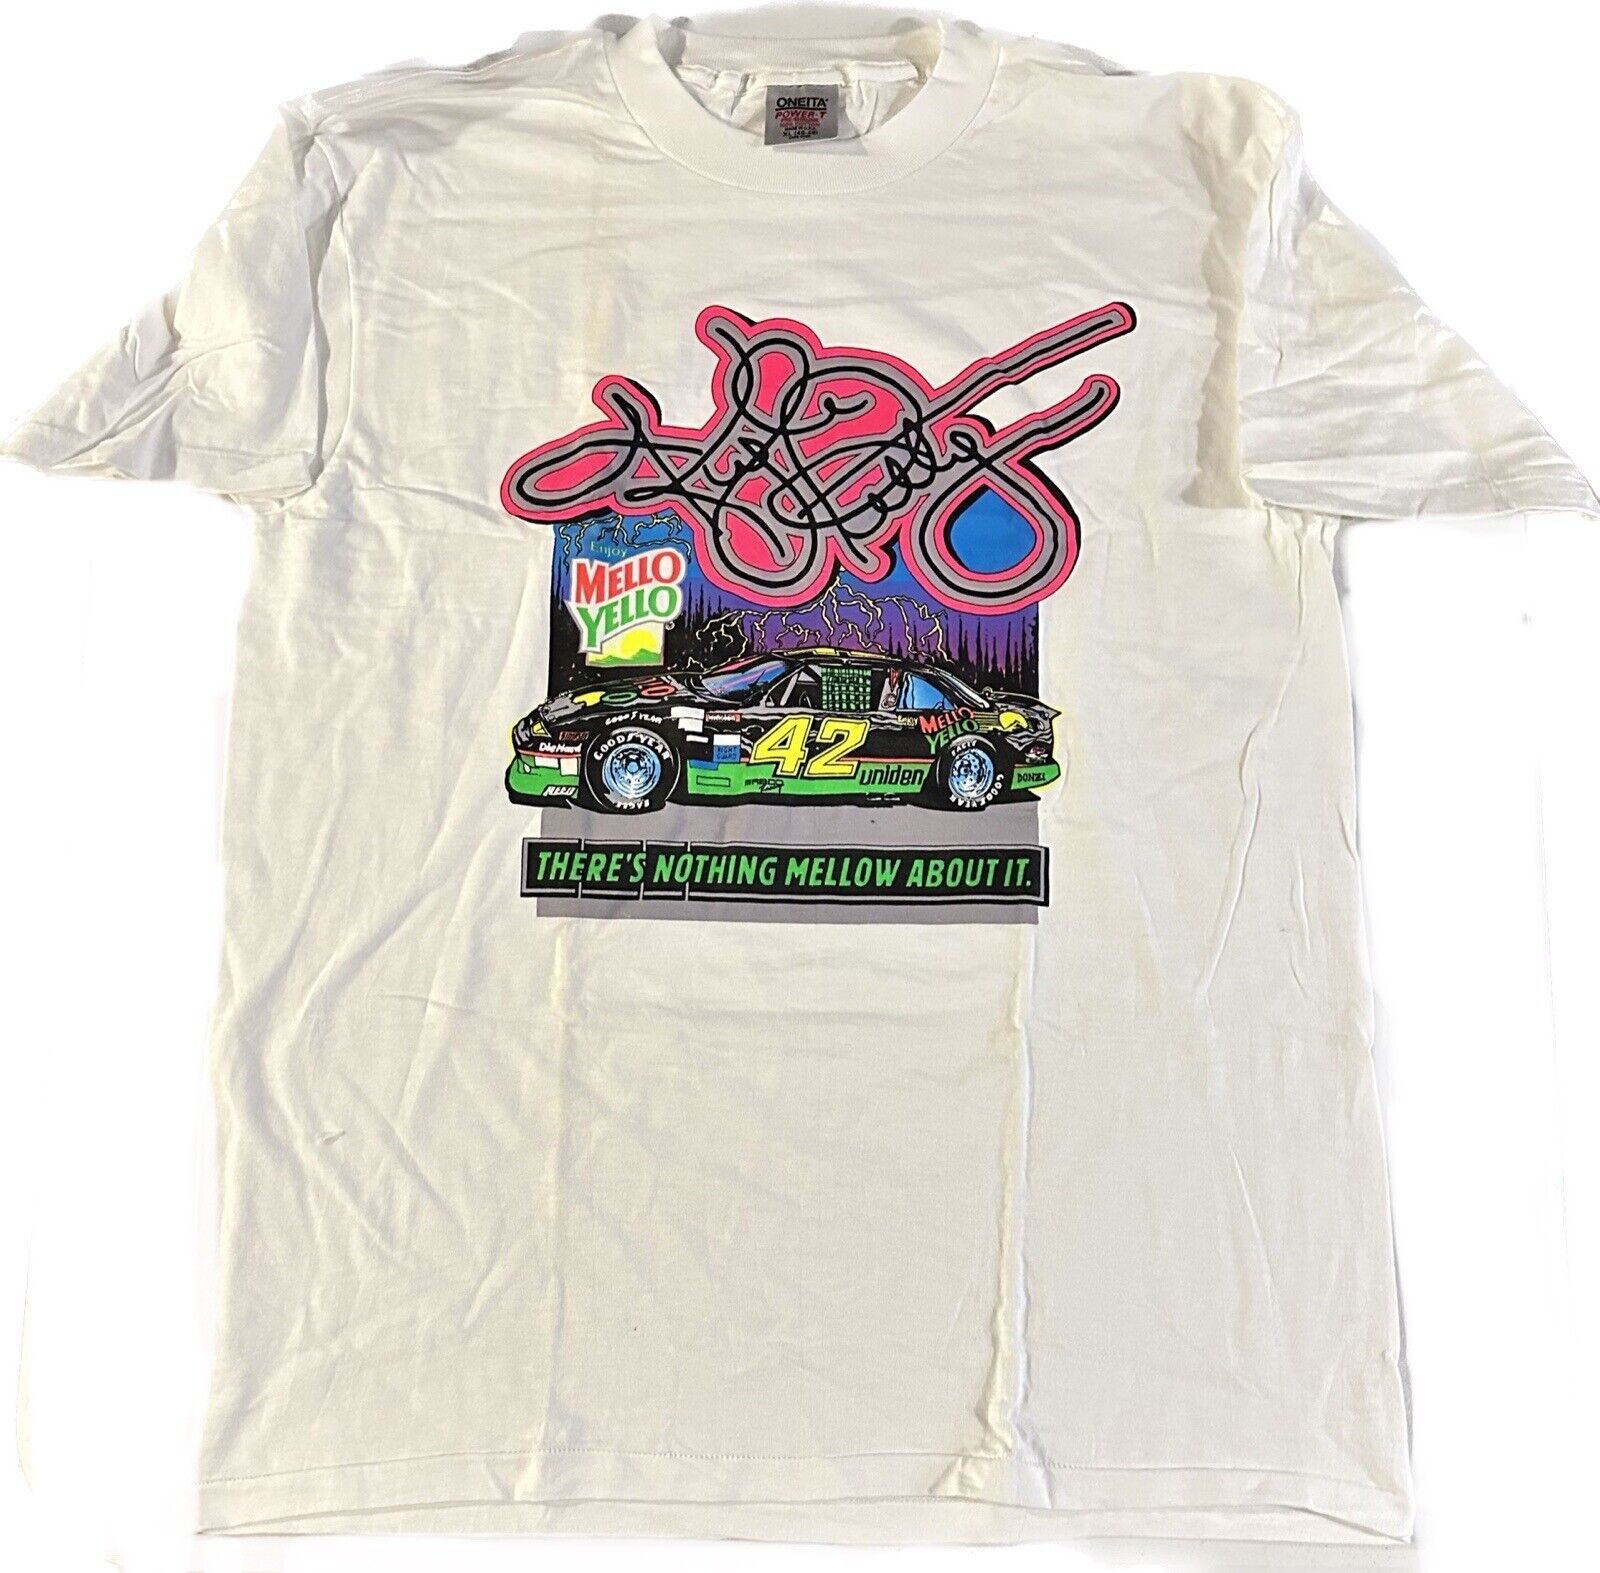 Kyle Petty Mello Yello Racing Short Sleeve T-Shirt LRG VTG 90’s NASCAR NWOT